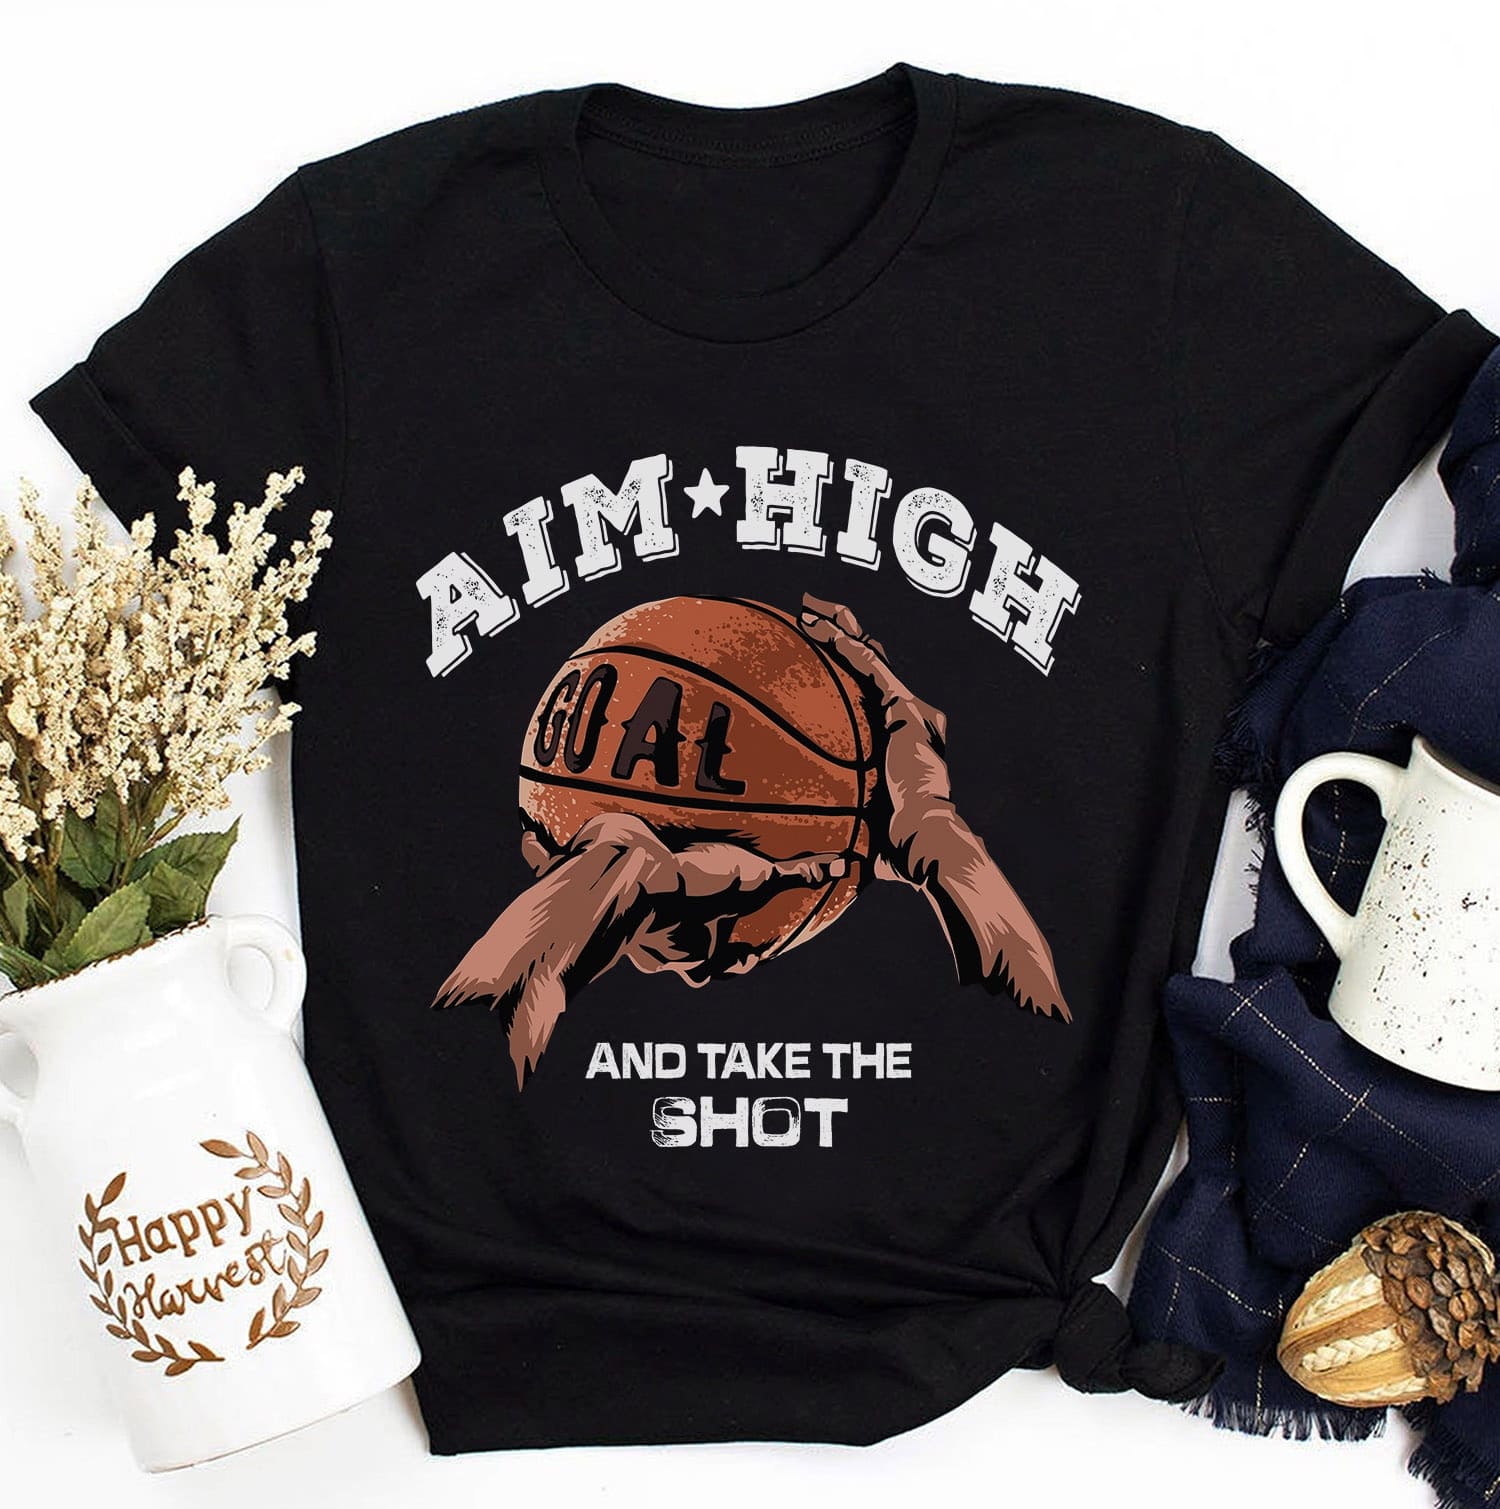 Aim high and take the shot - Basketball player T-shirt, baseketball goal